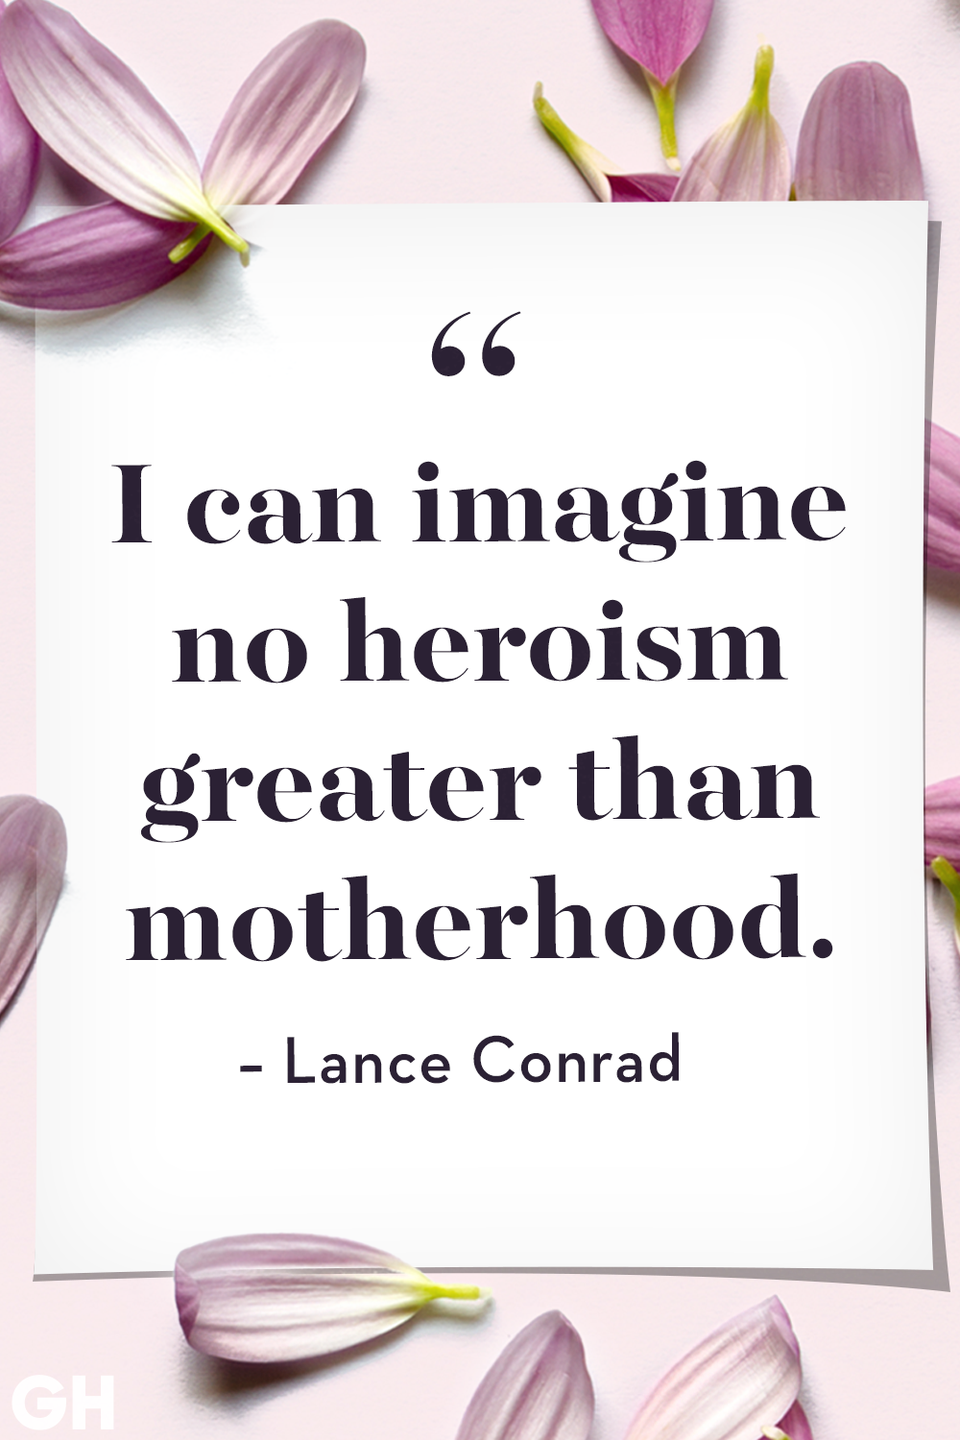 <p>I can imagine no heroism greater than motherhood.</p>